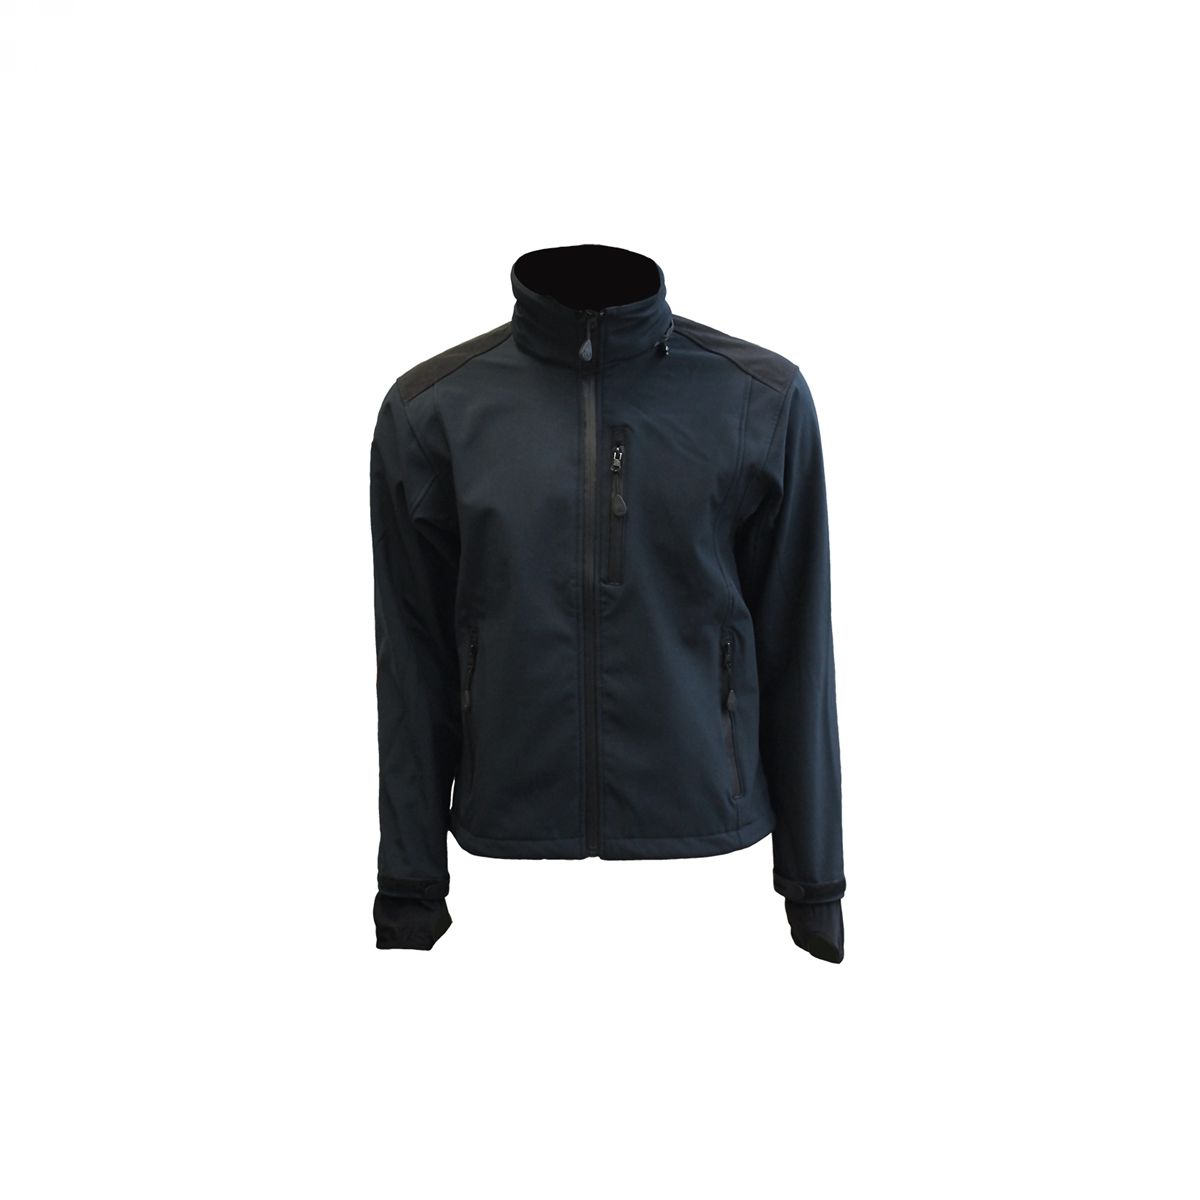 Softshell jakna plavo-crna DANTE